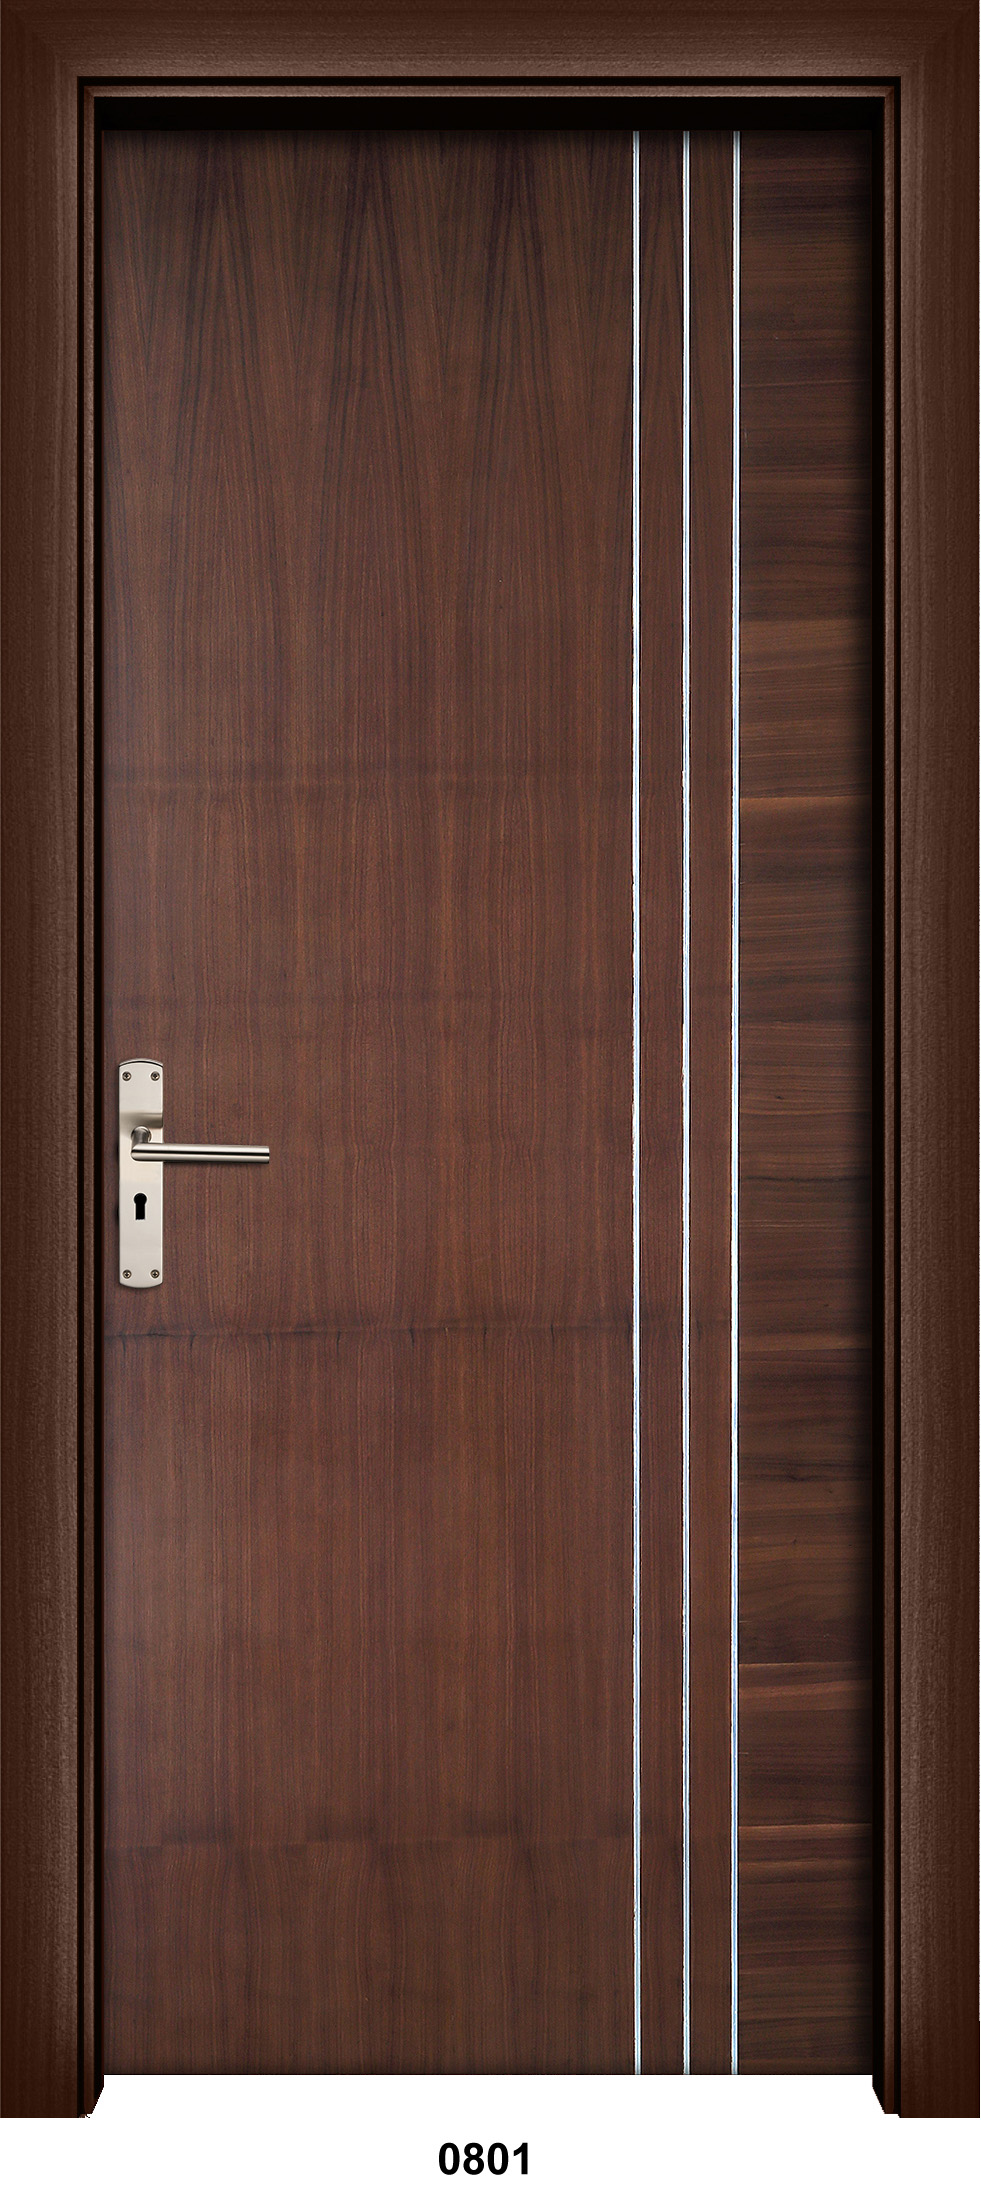 Laminated doors online, laminated door manufacturers